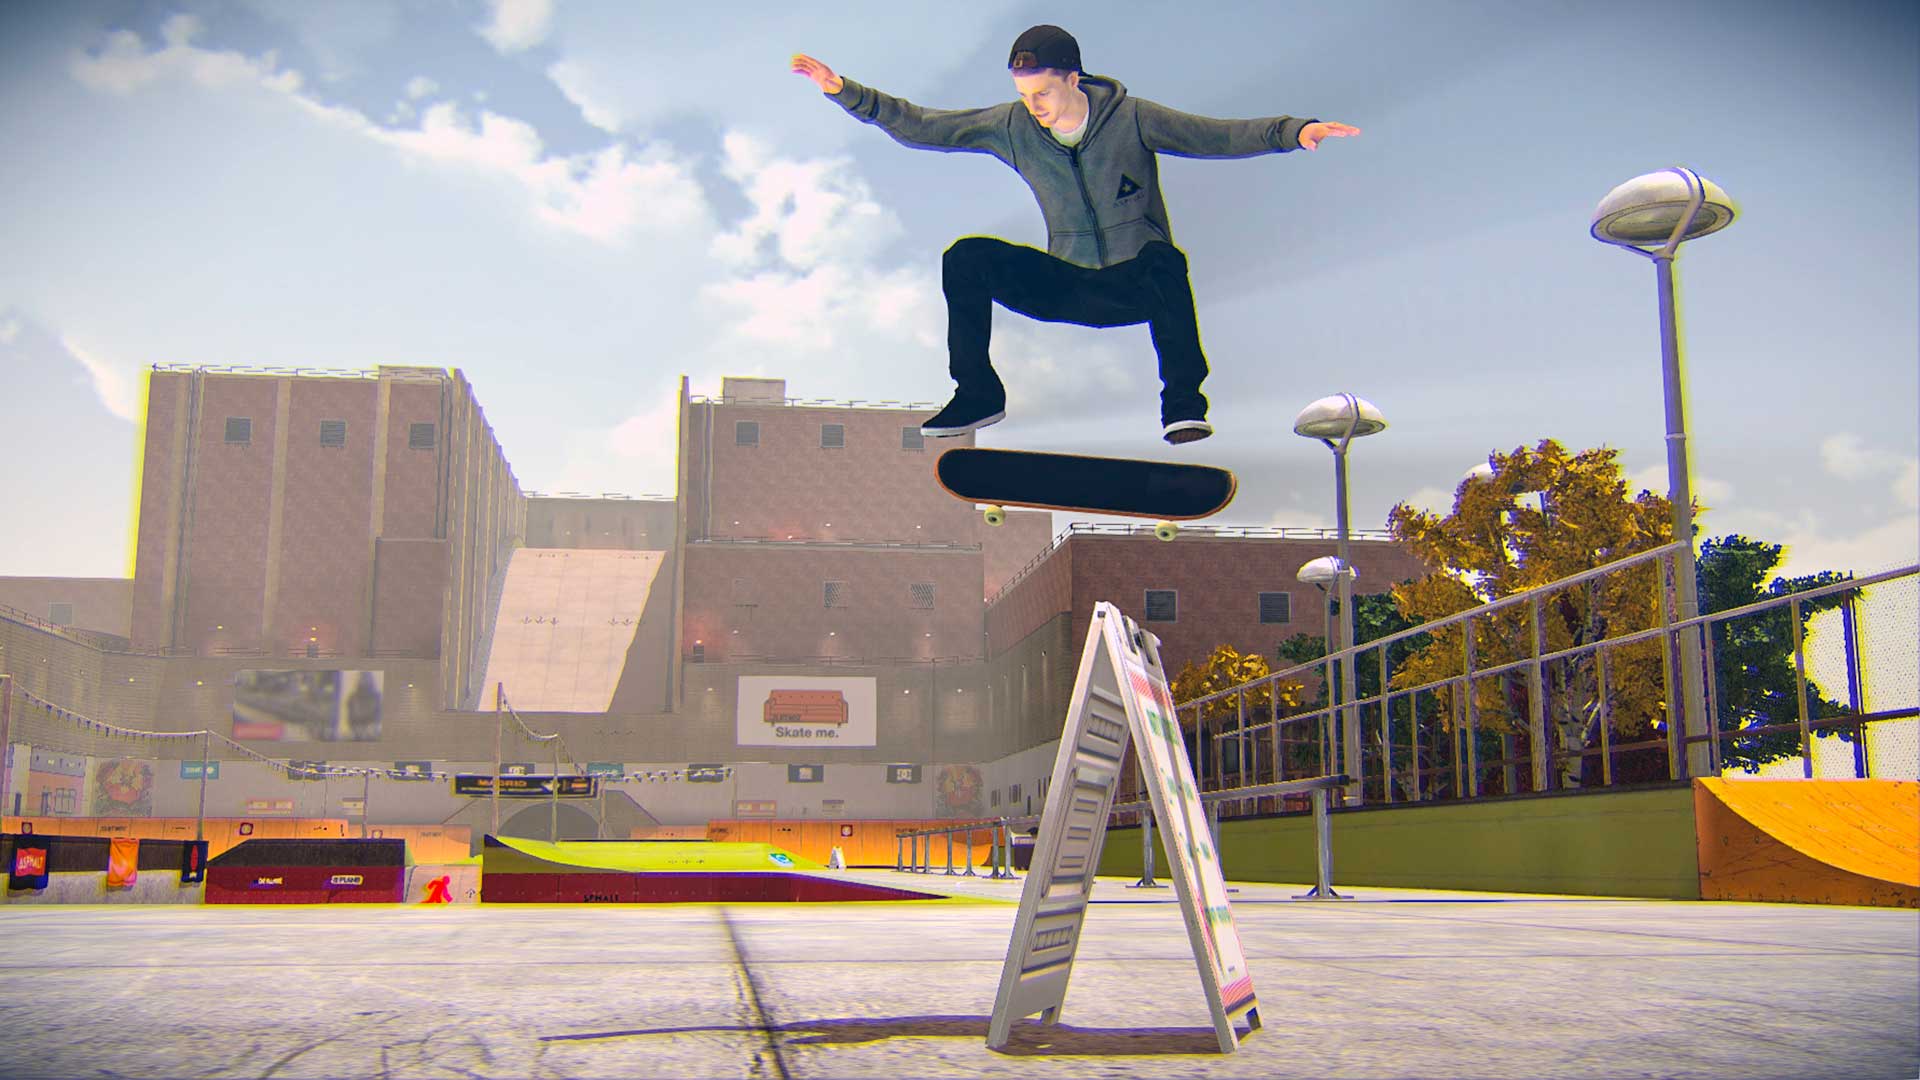 Tony Hawk's Pro Skater 5's Full Soundtrack Revealed